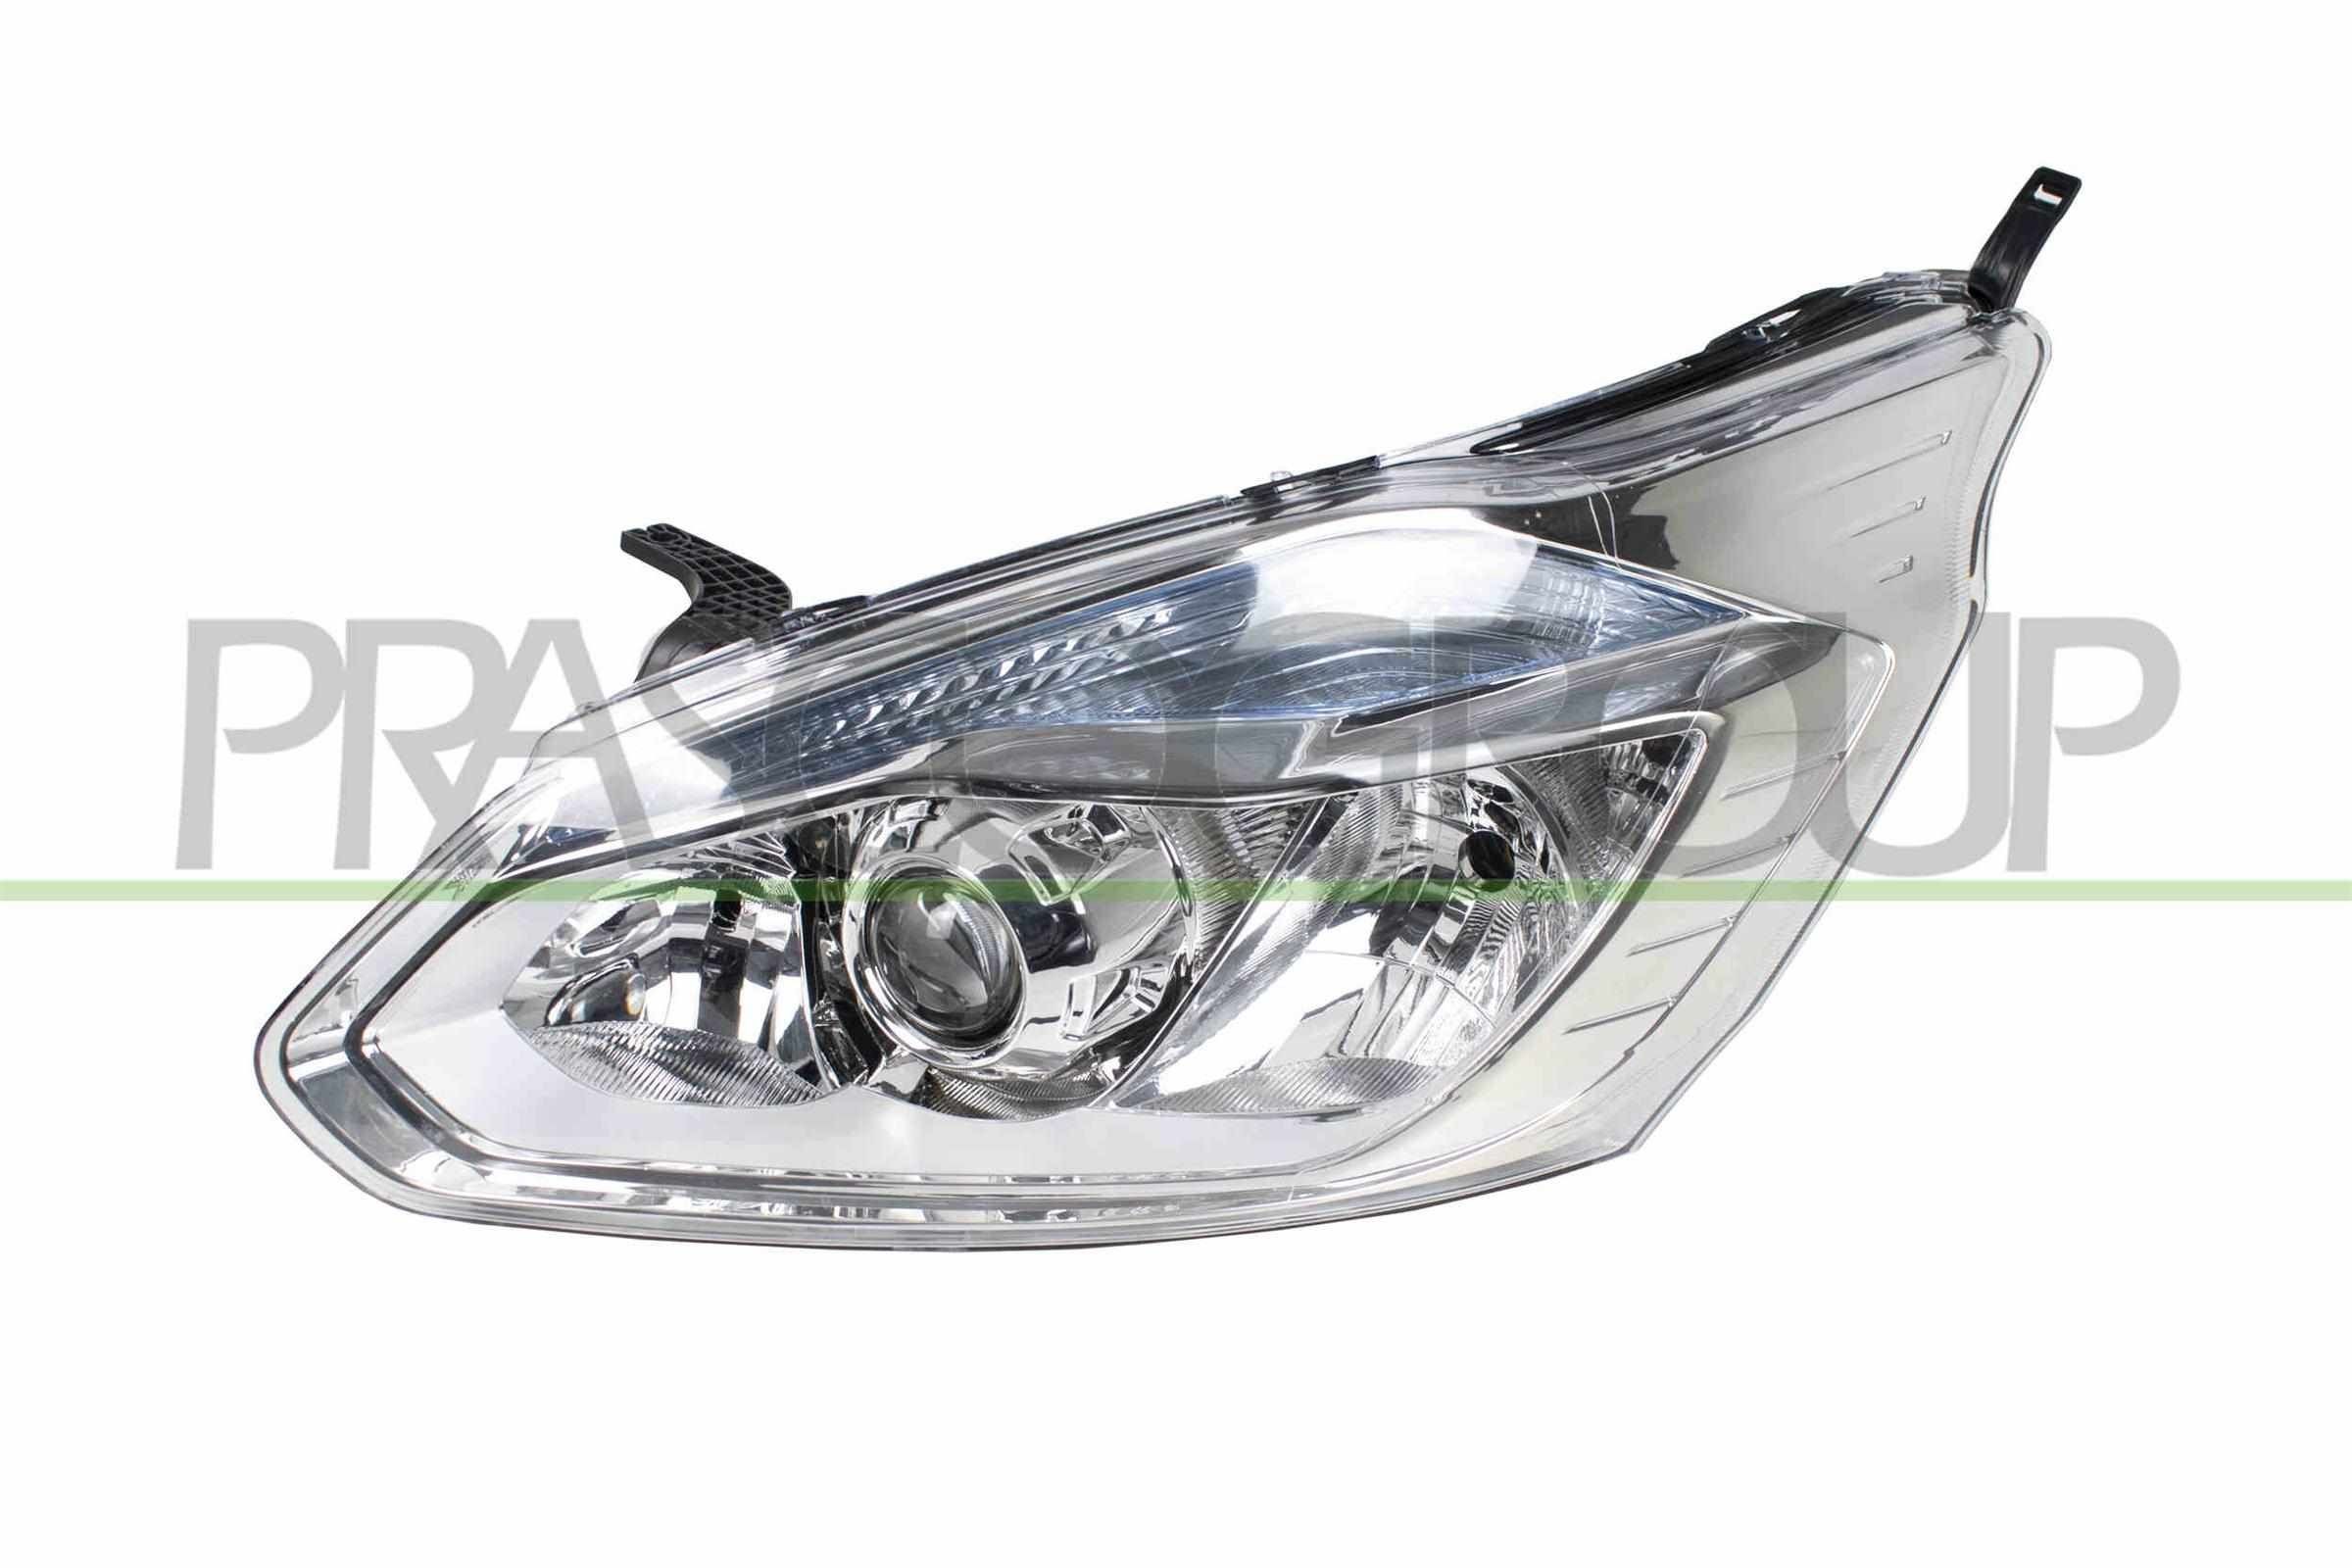 PRASCO FD9144914 Headlight Left, H15, H7/H1, with dynamic bending light, with motor for headlamp levelling